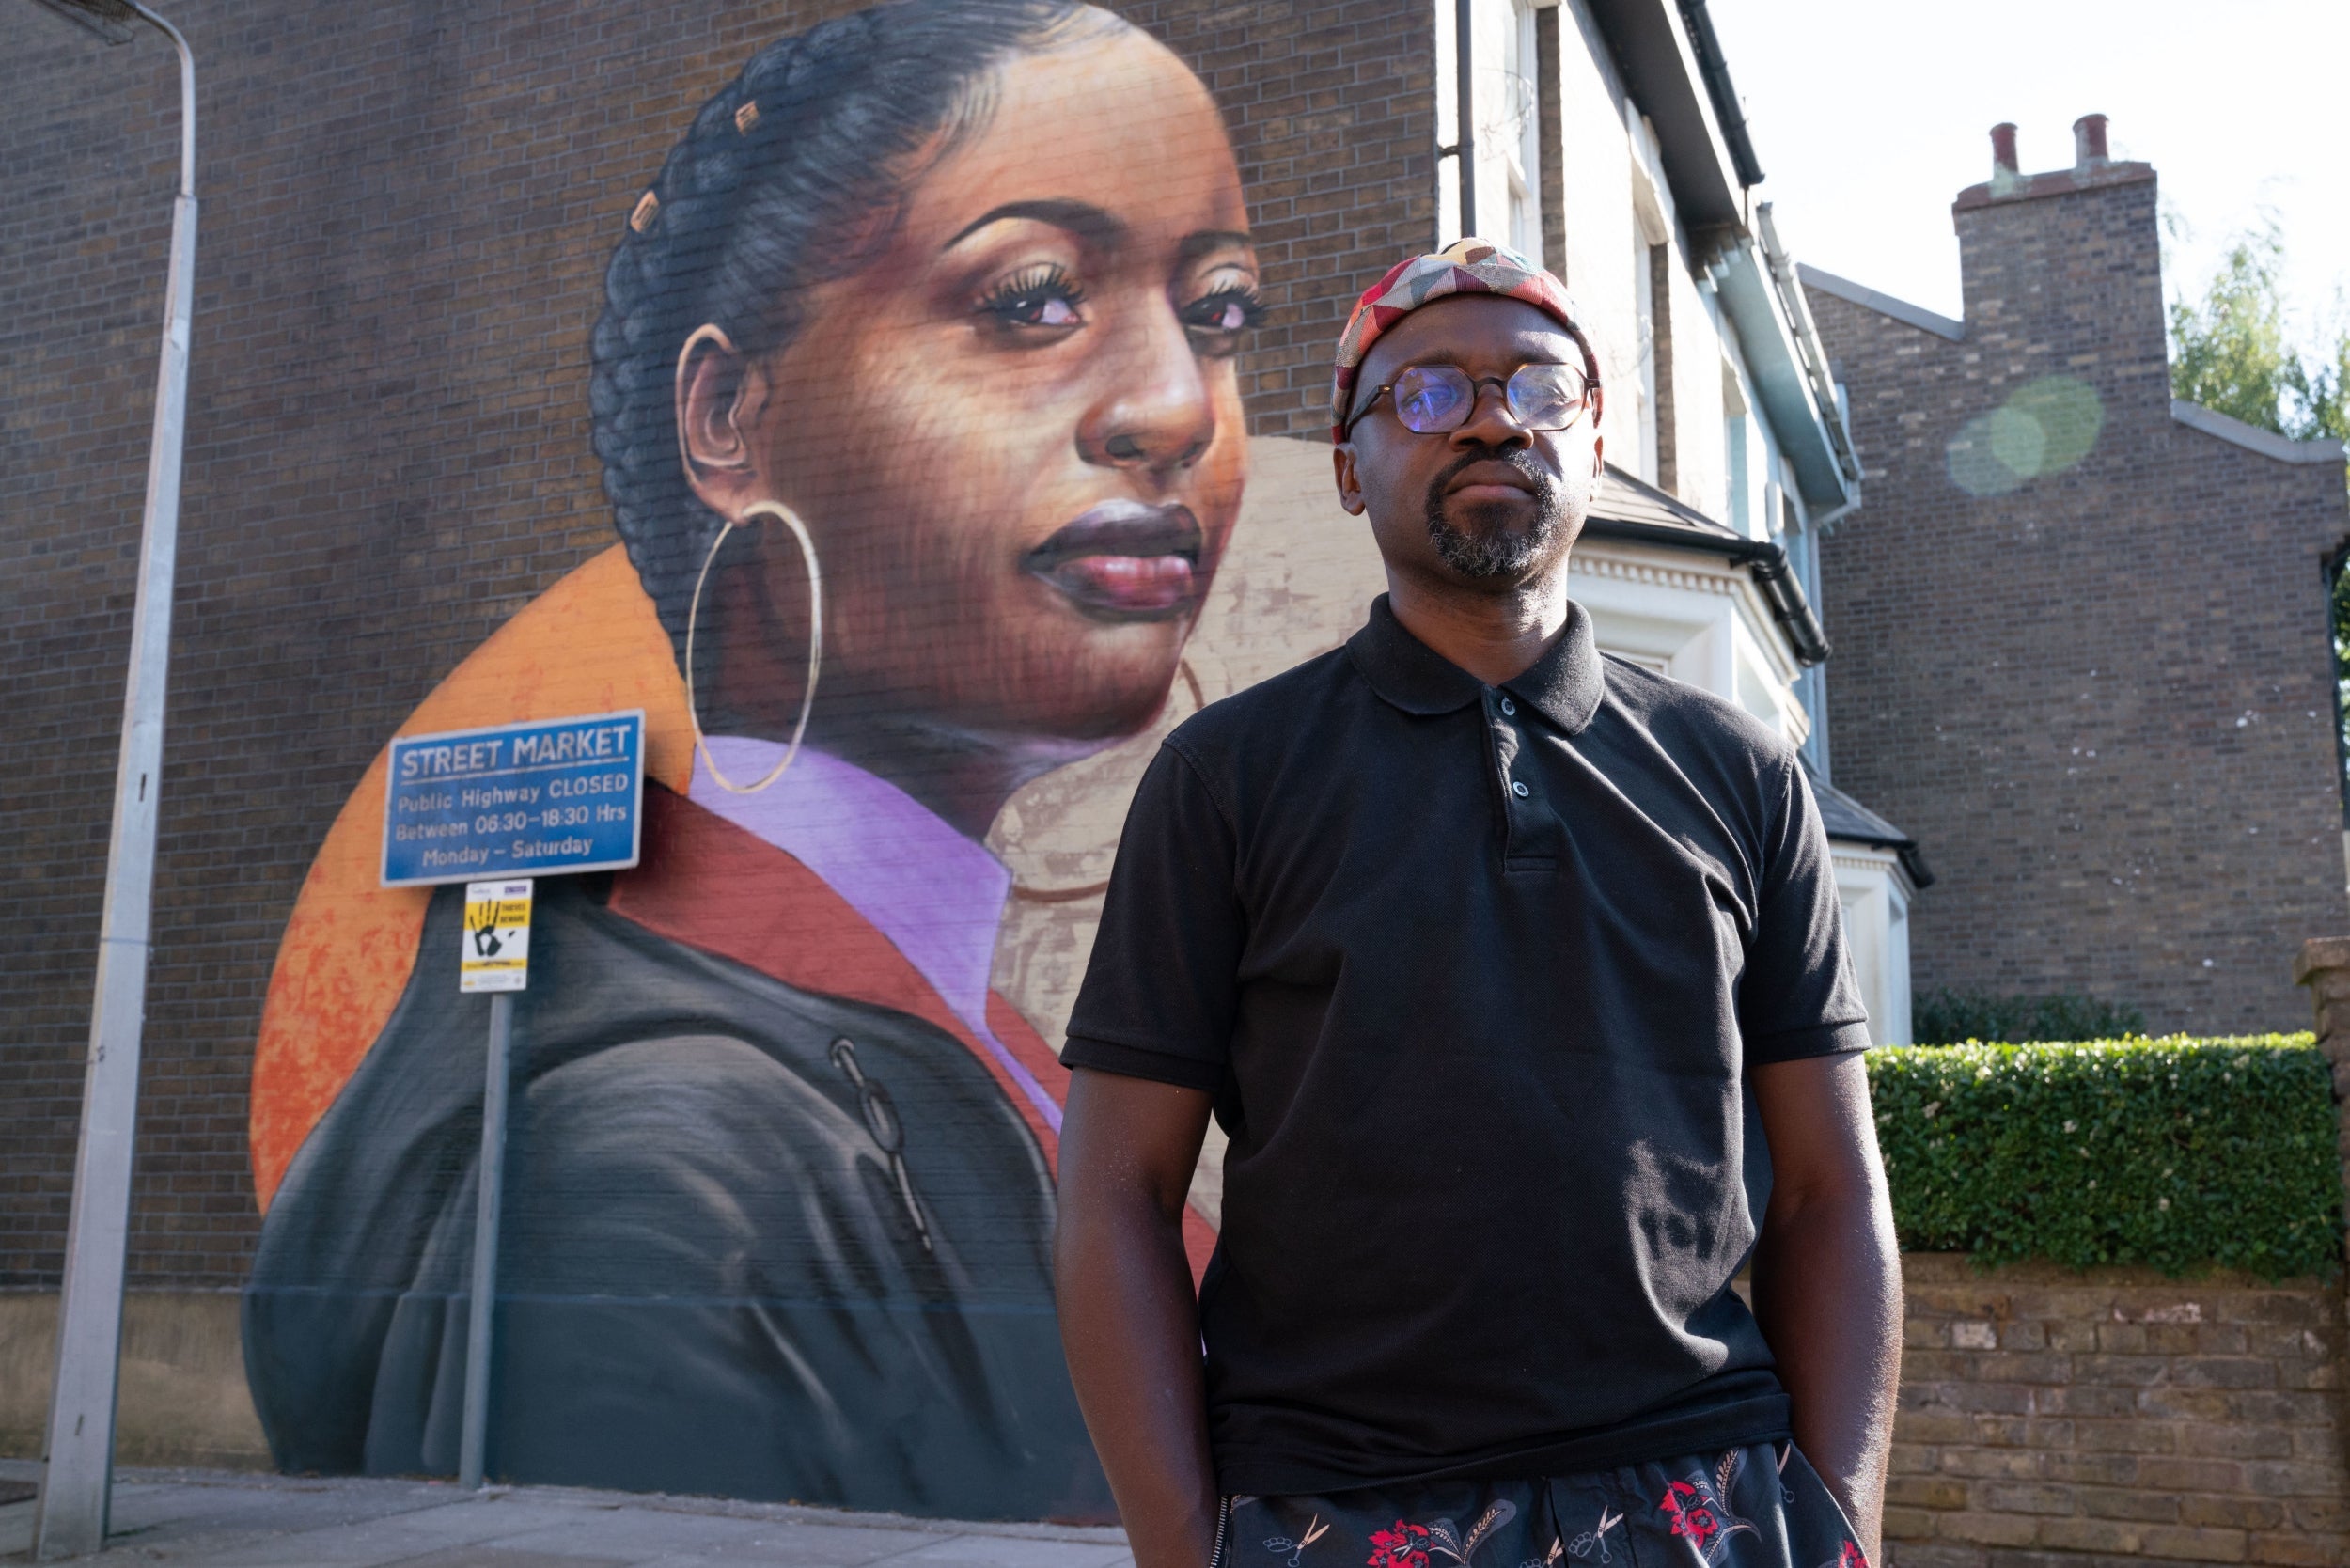 EastEnders unveils stunning mural of black woman by London artist Dreph in new Albert Square set